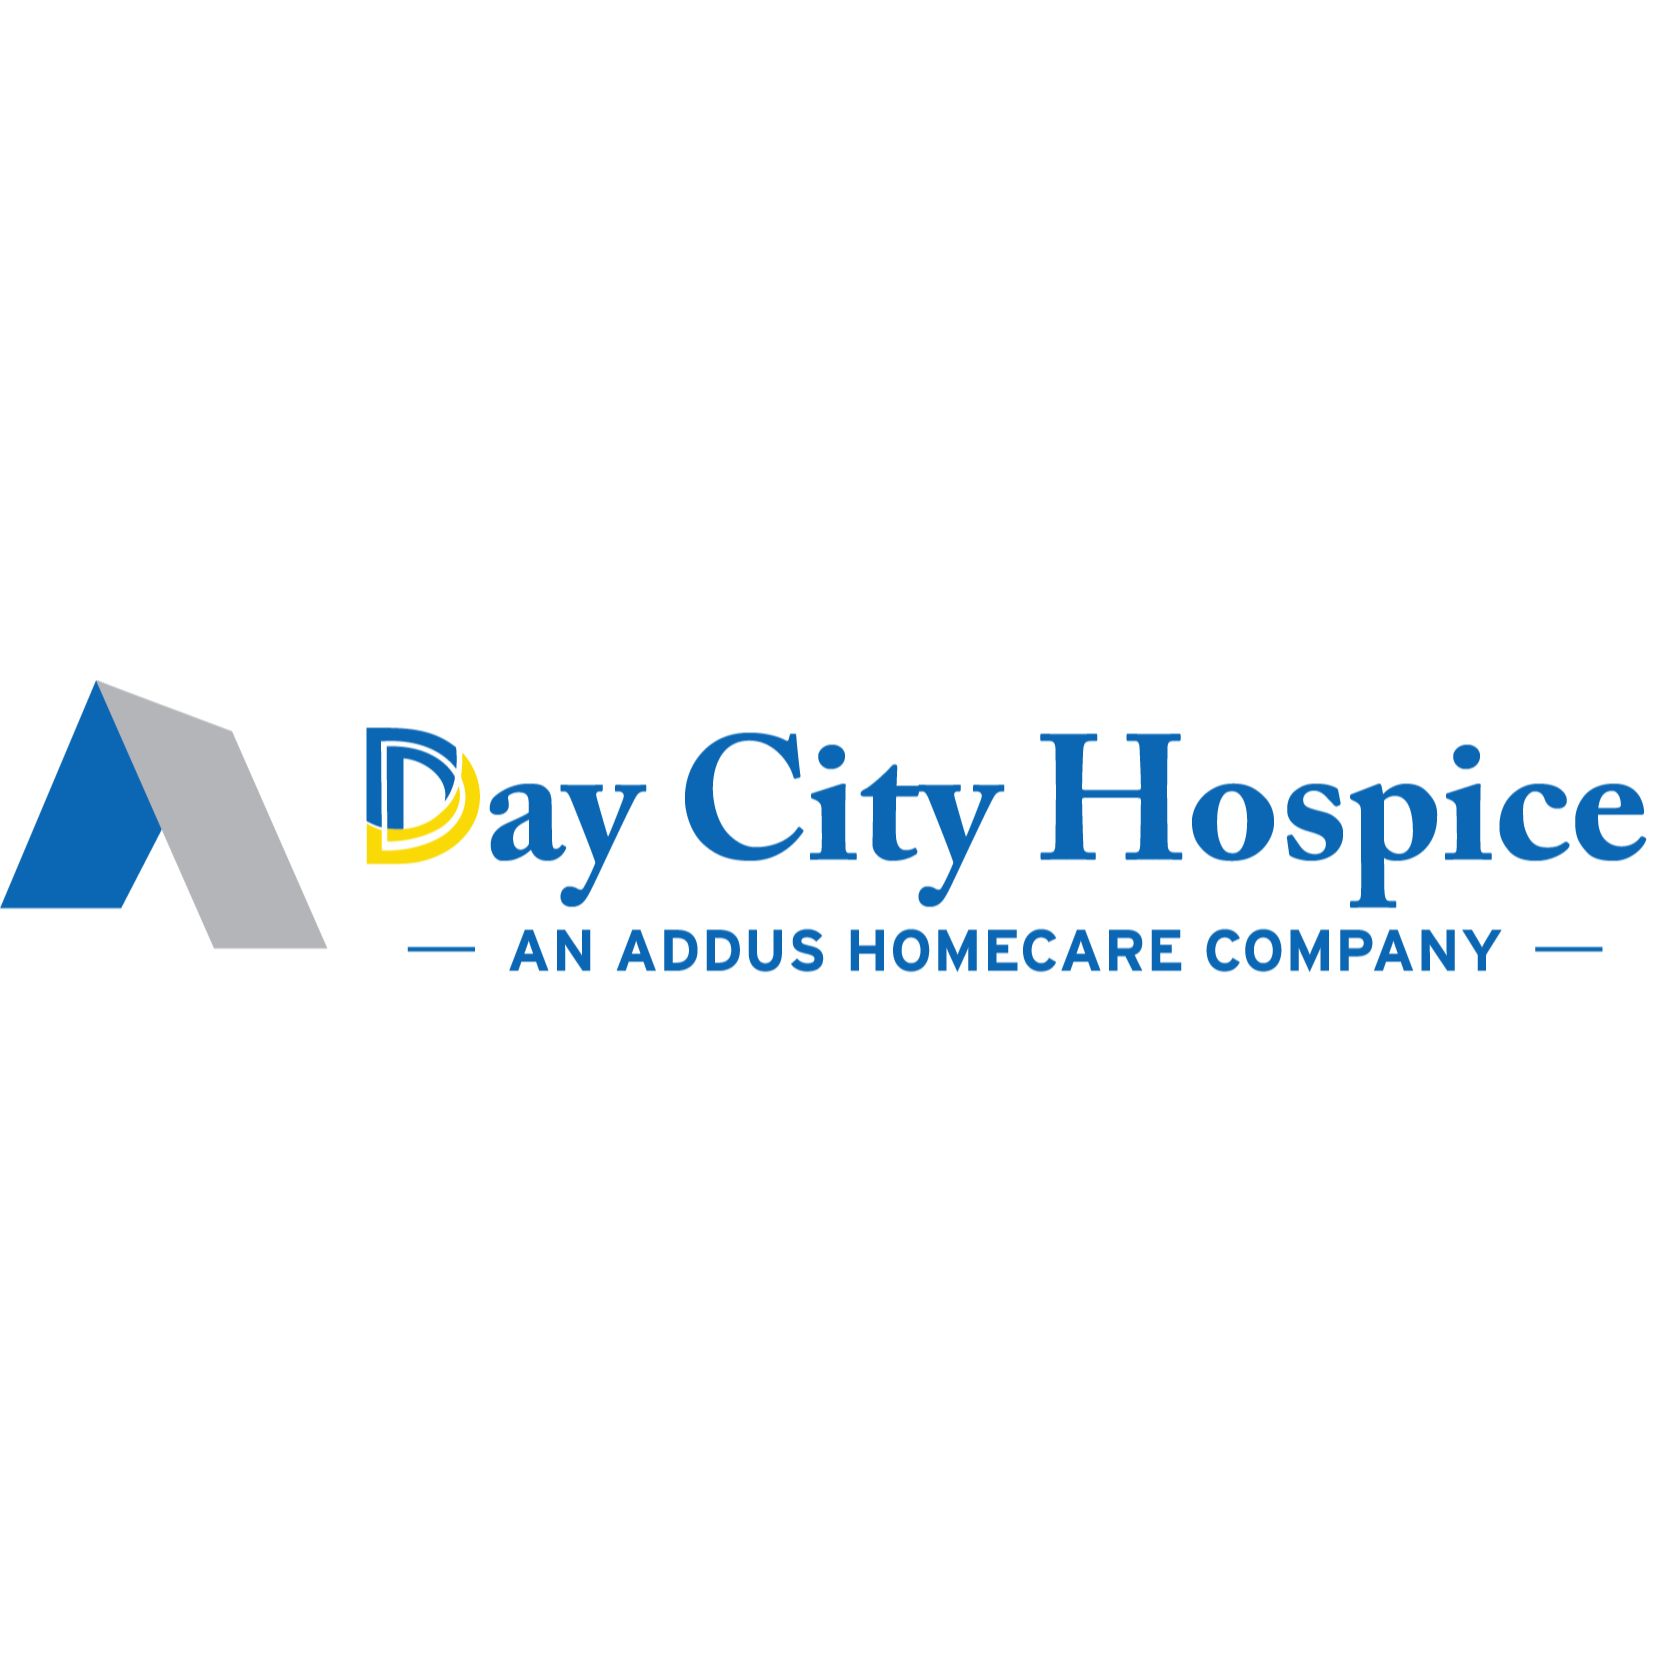 Day City Hospice